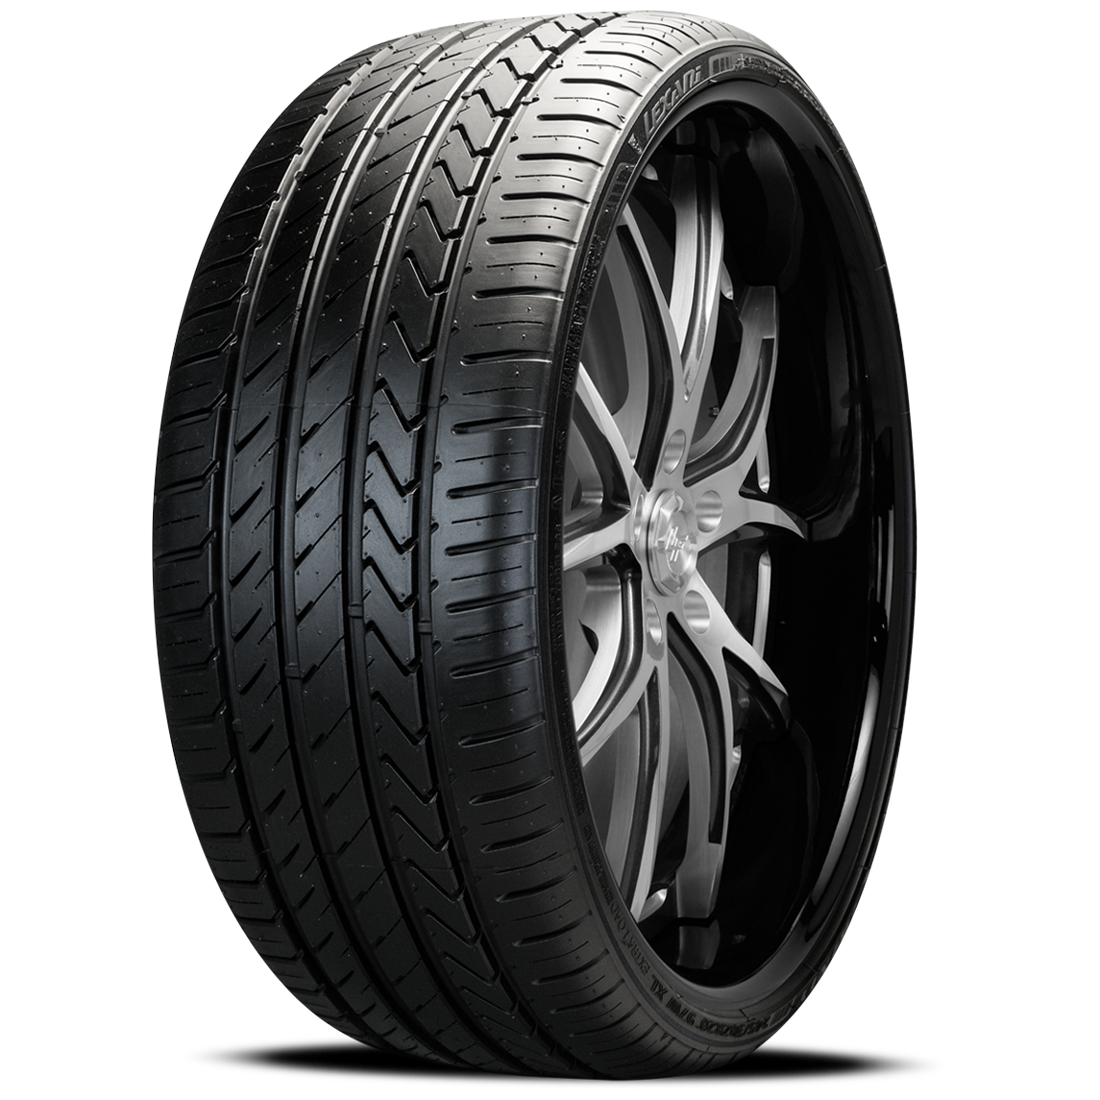 LEXANI LX-TWENTY 255/30ZR19 (25.1X10.2R 19) Tires